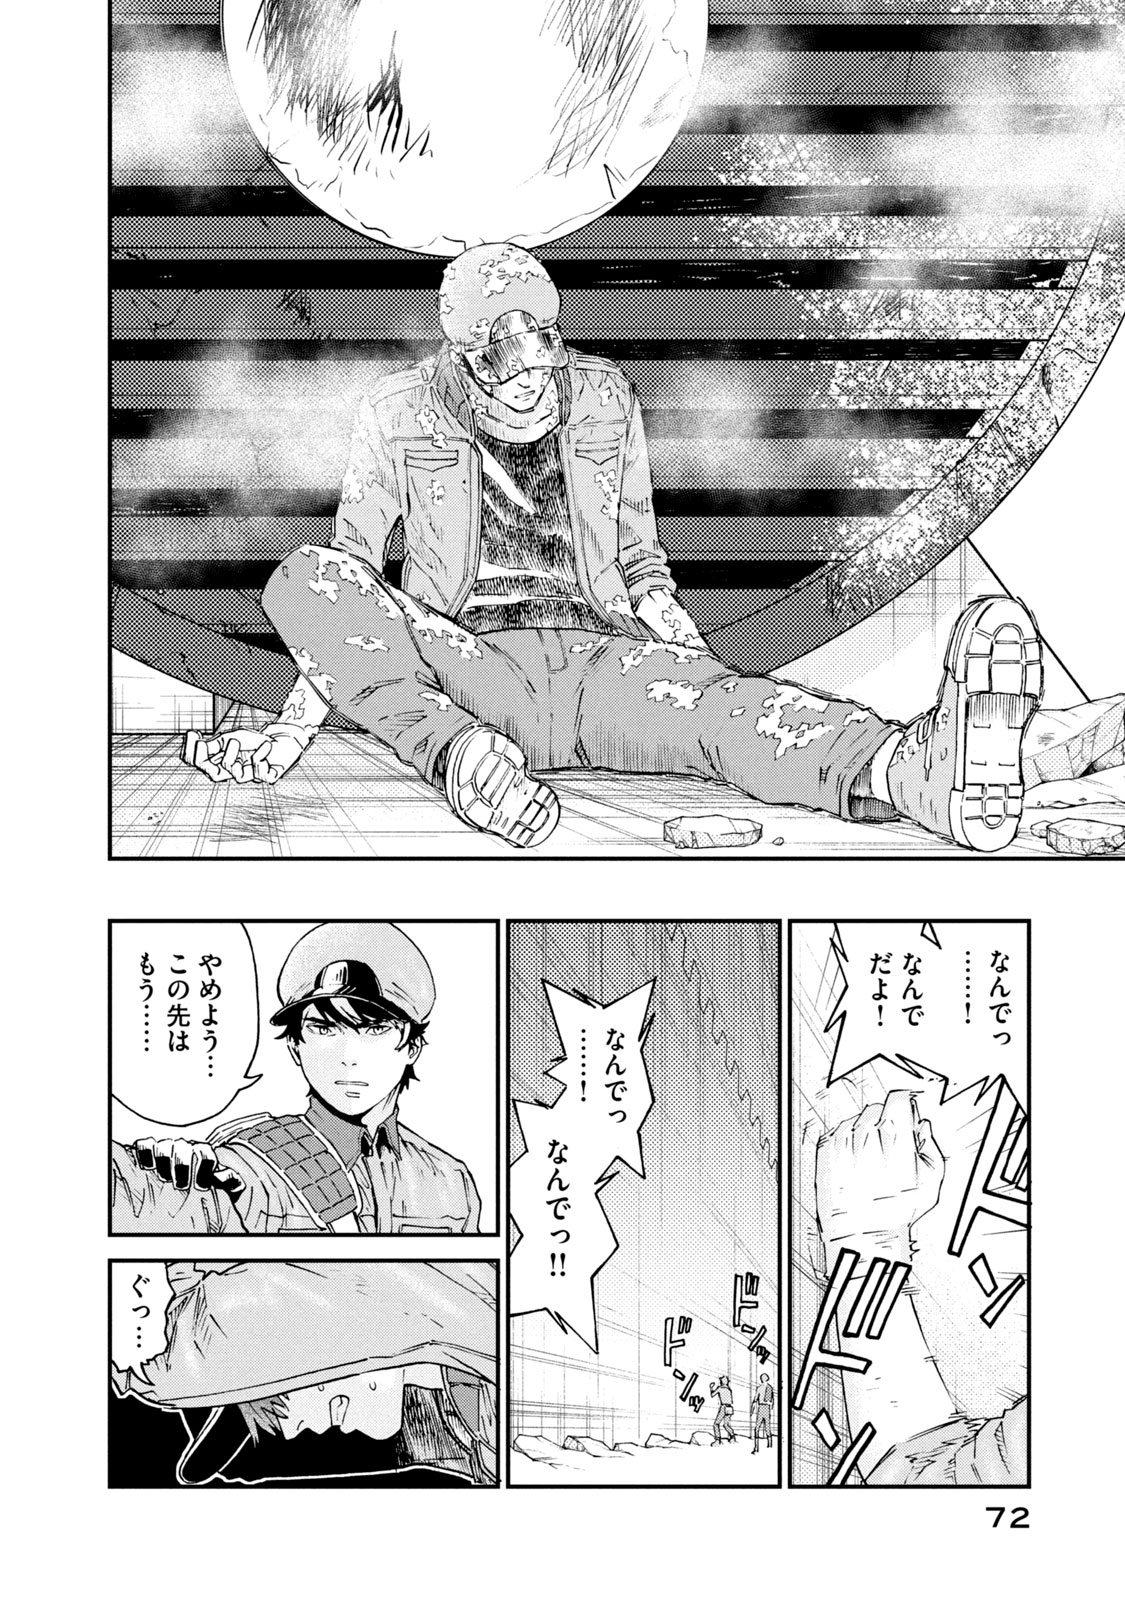 Hataraku Saibou BLACK - Chapter 39 - Page 10